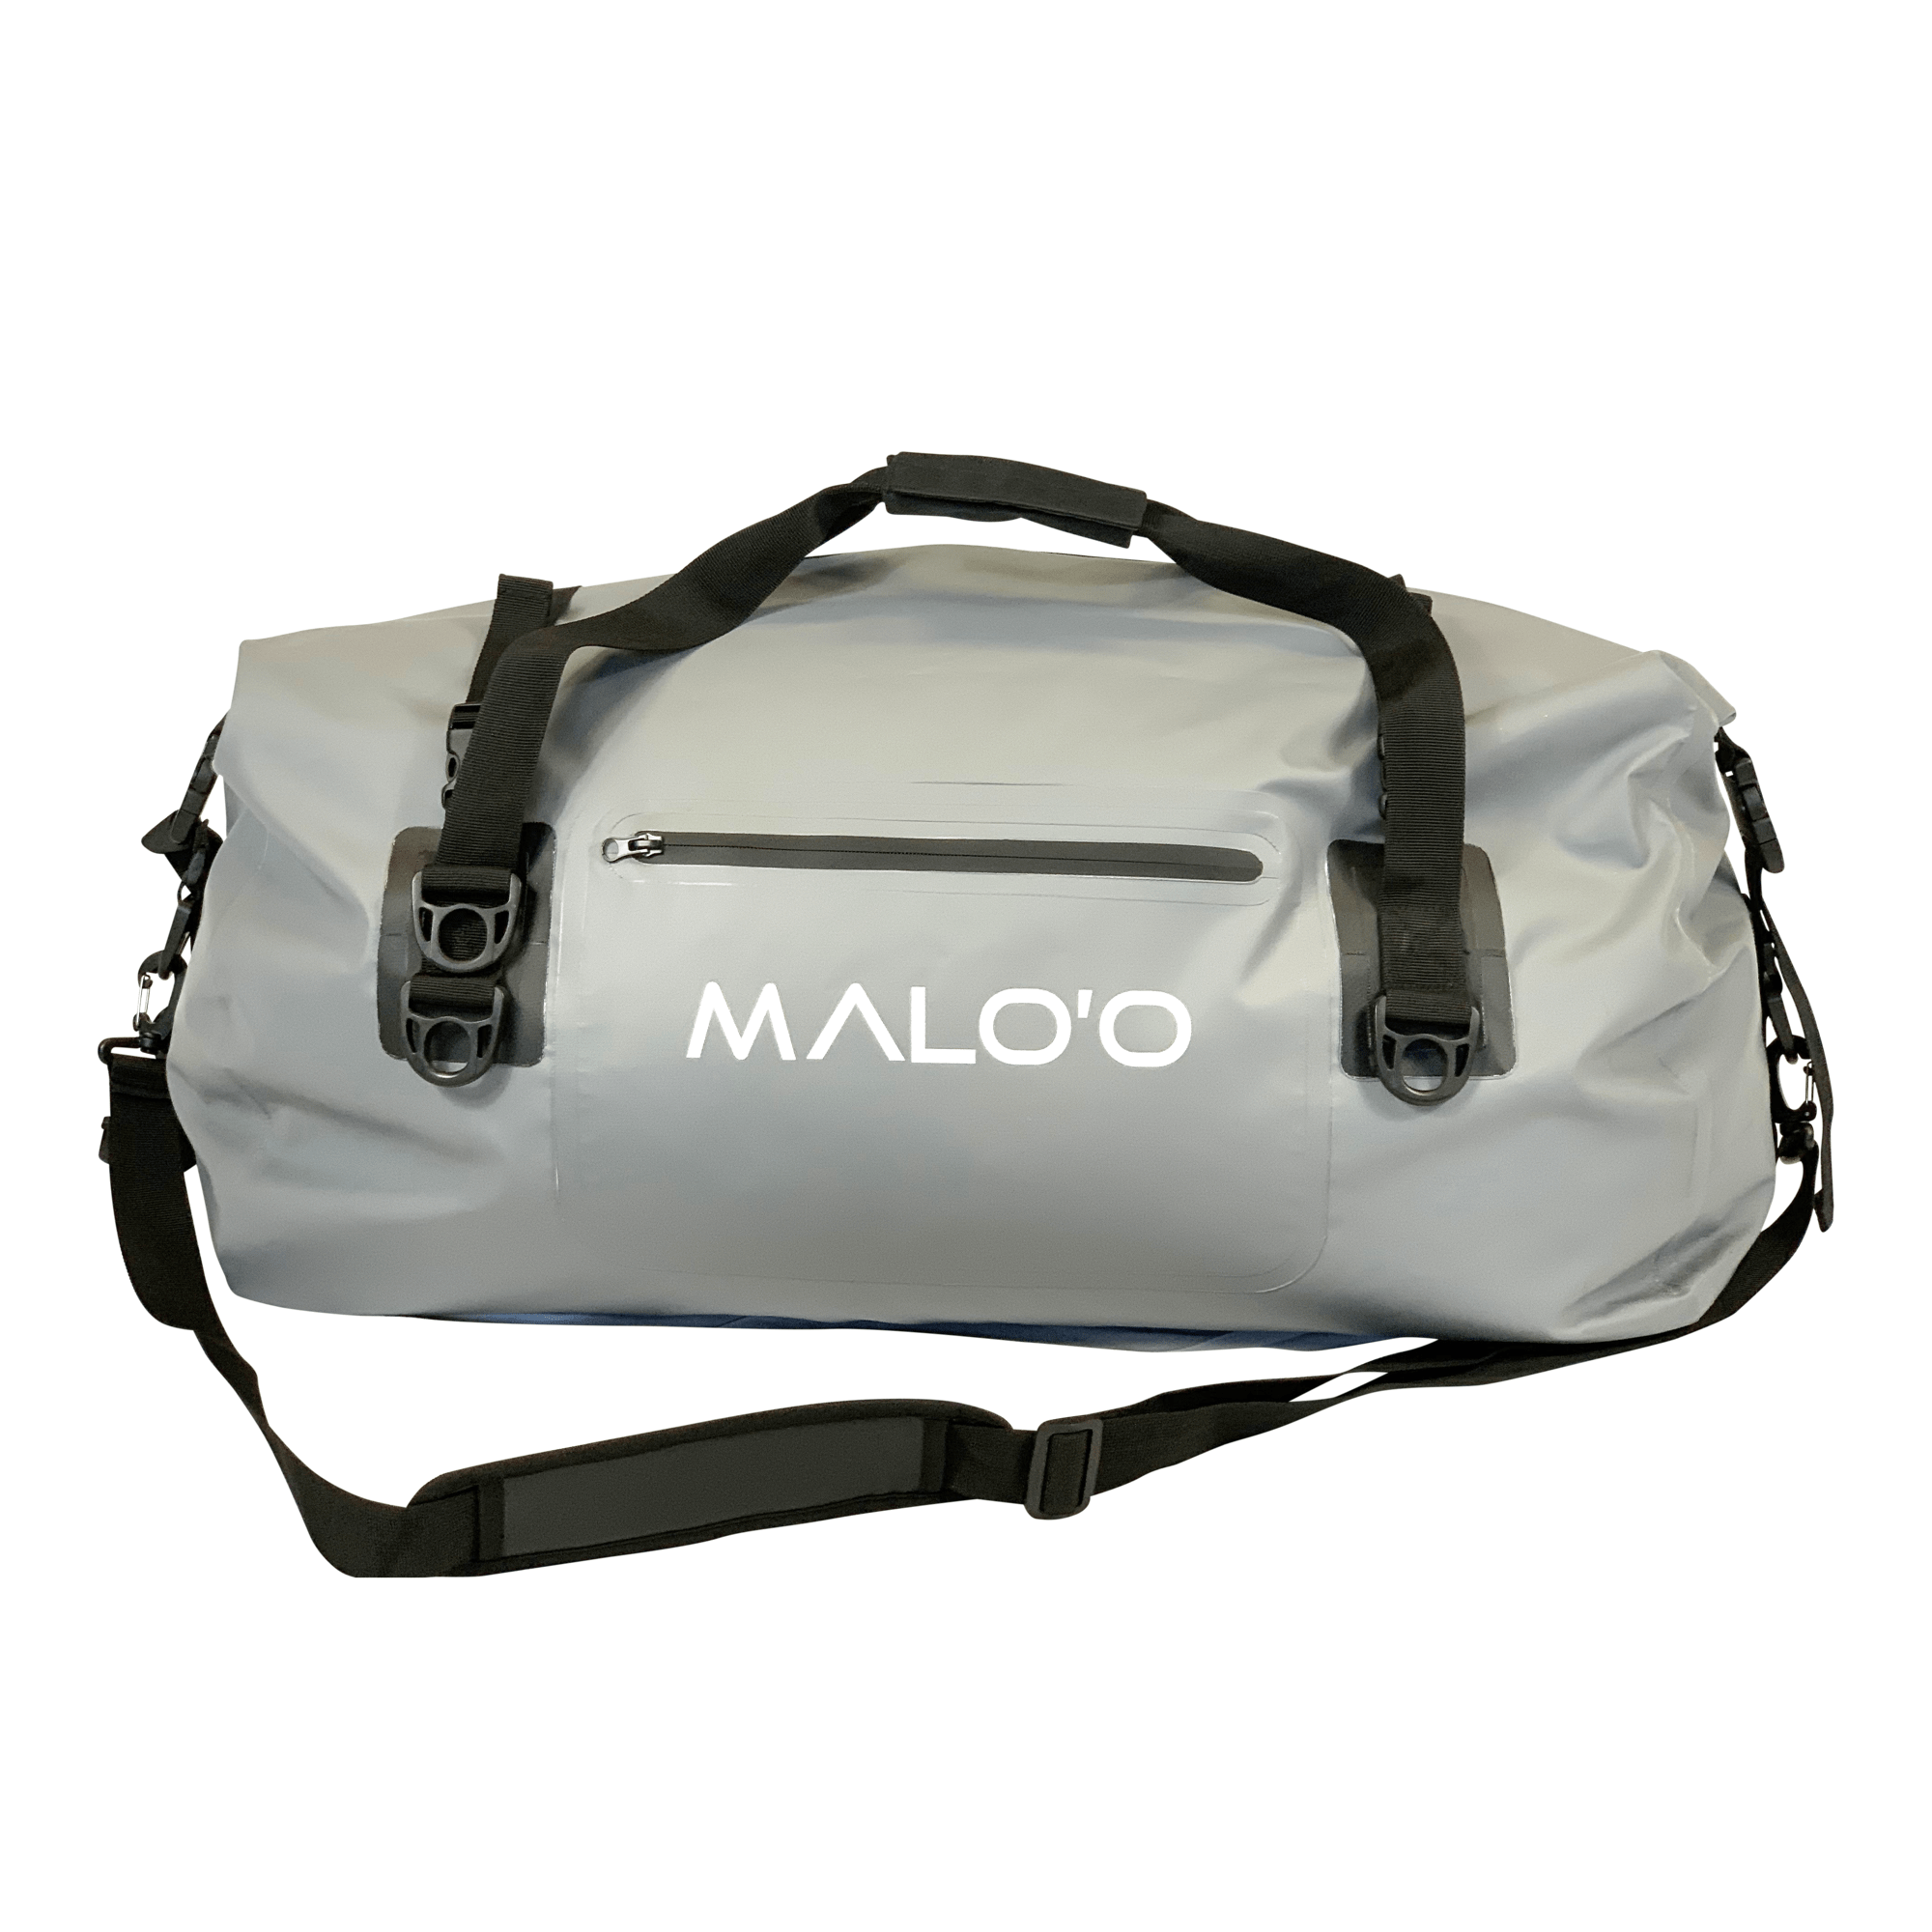 Malo'o Racks DryPack Grey / X-Large - 60 Liter MALO’O DRYPACK WATERPROOF ROLL-TOP DUFFLE BAG